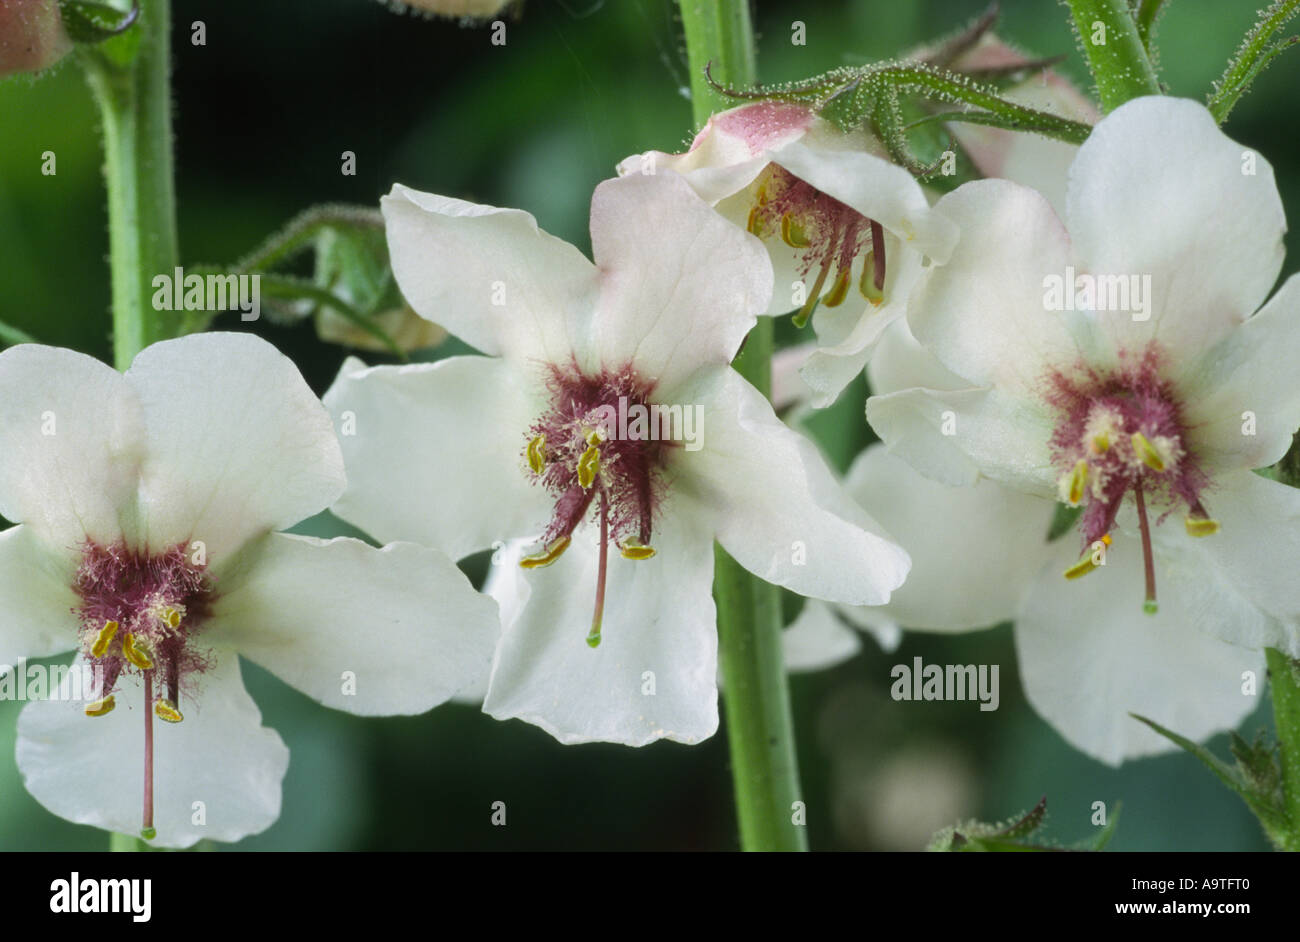 Verbascum blattaria. Moth mullein. Stock Photo